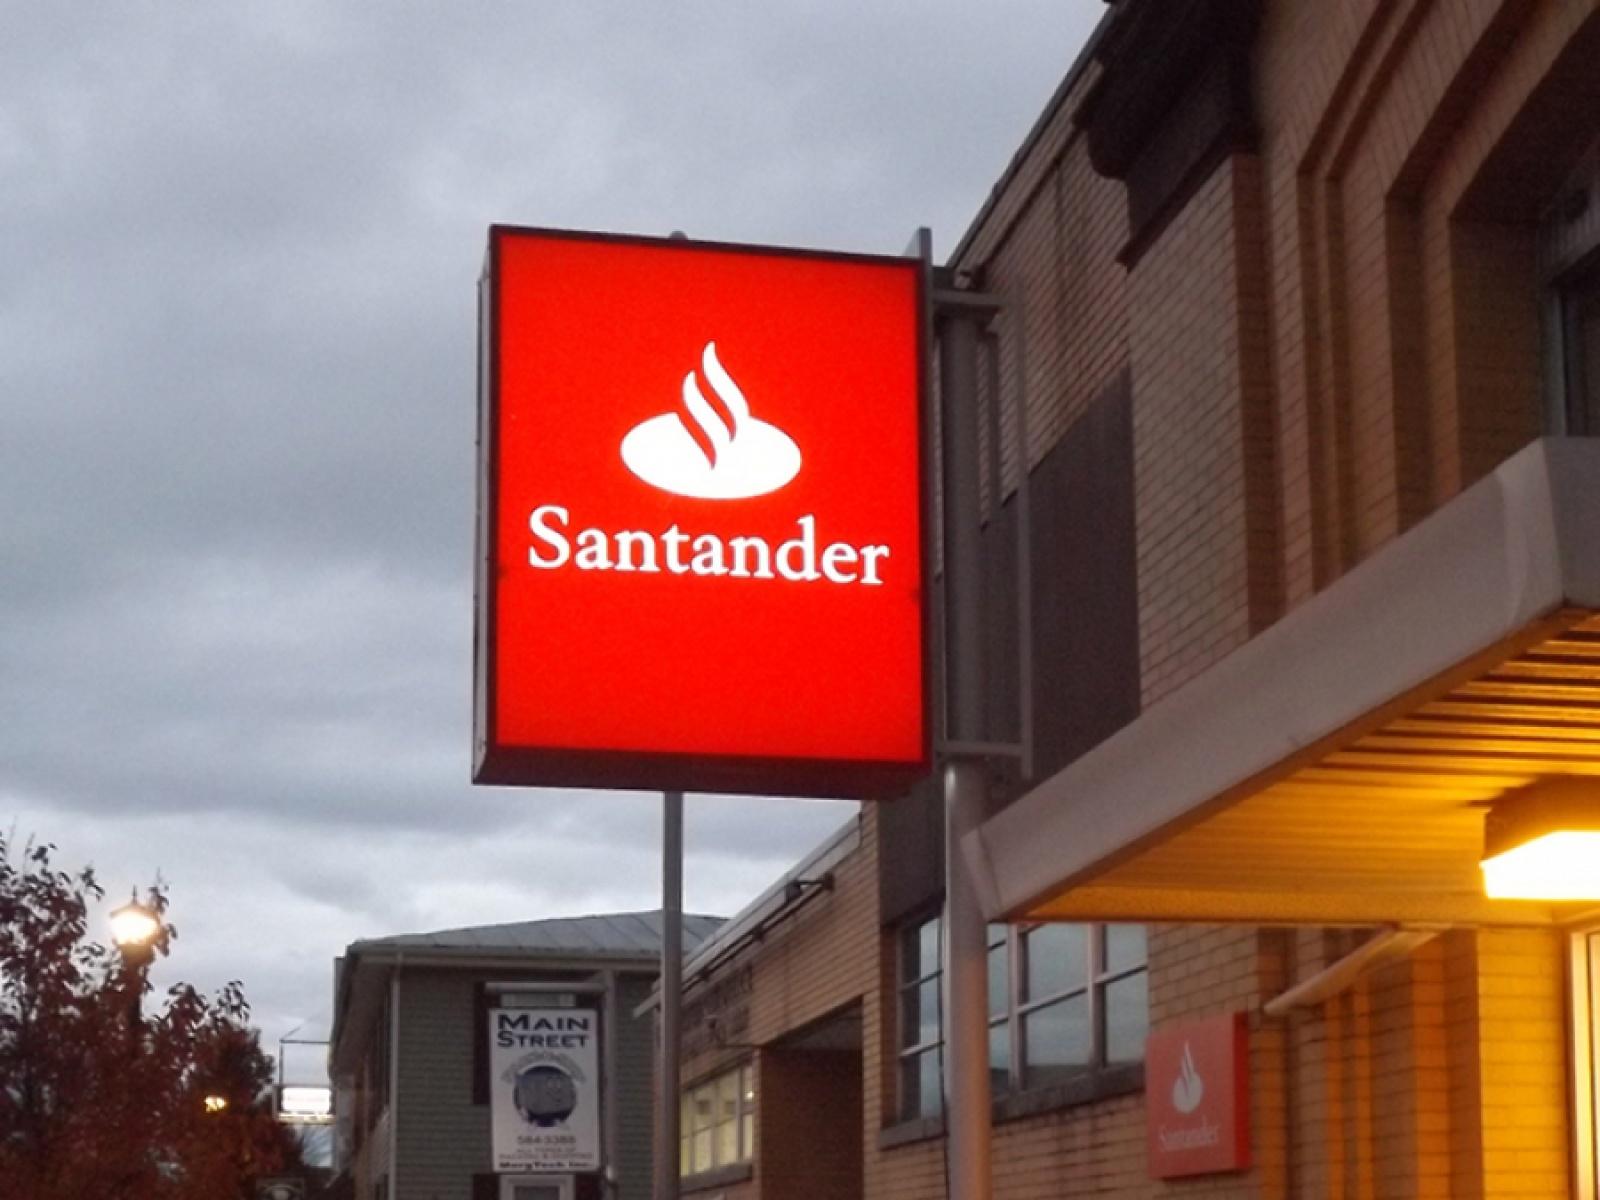 Santander corporate signage